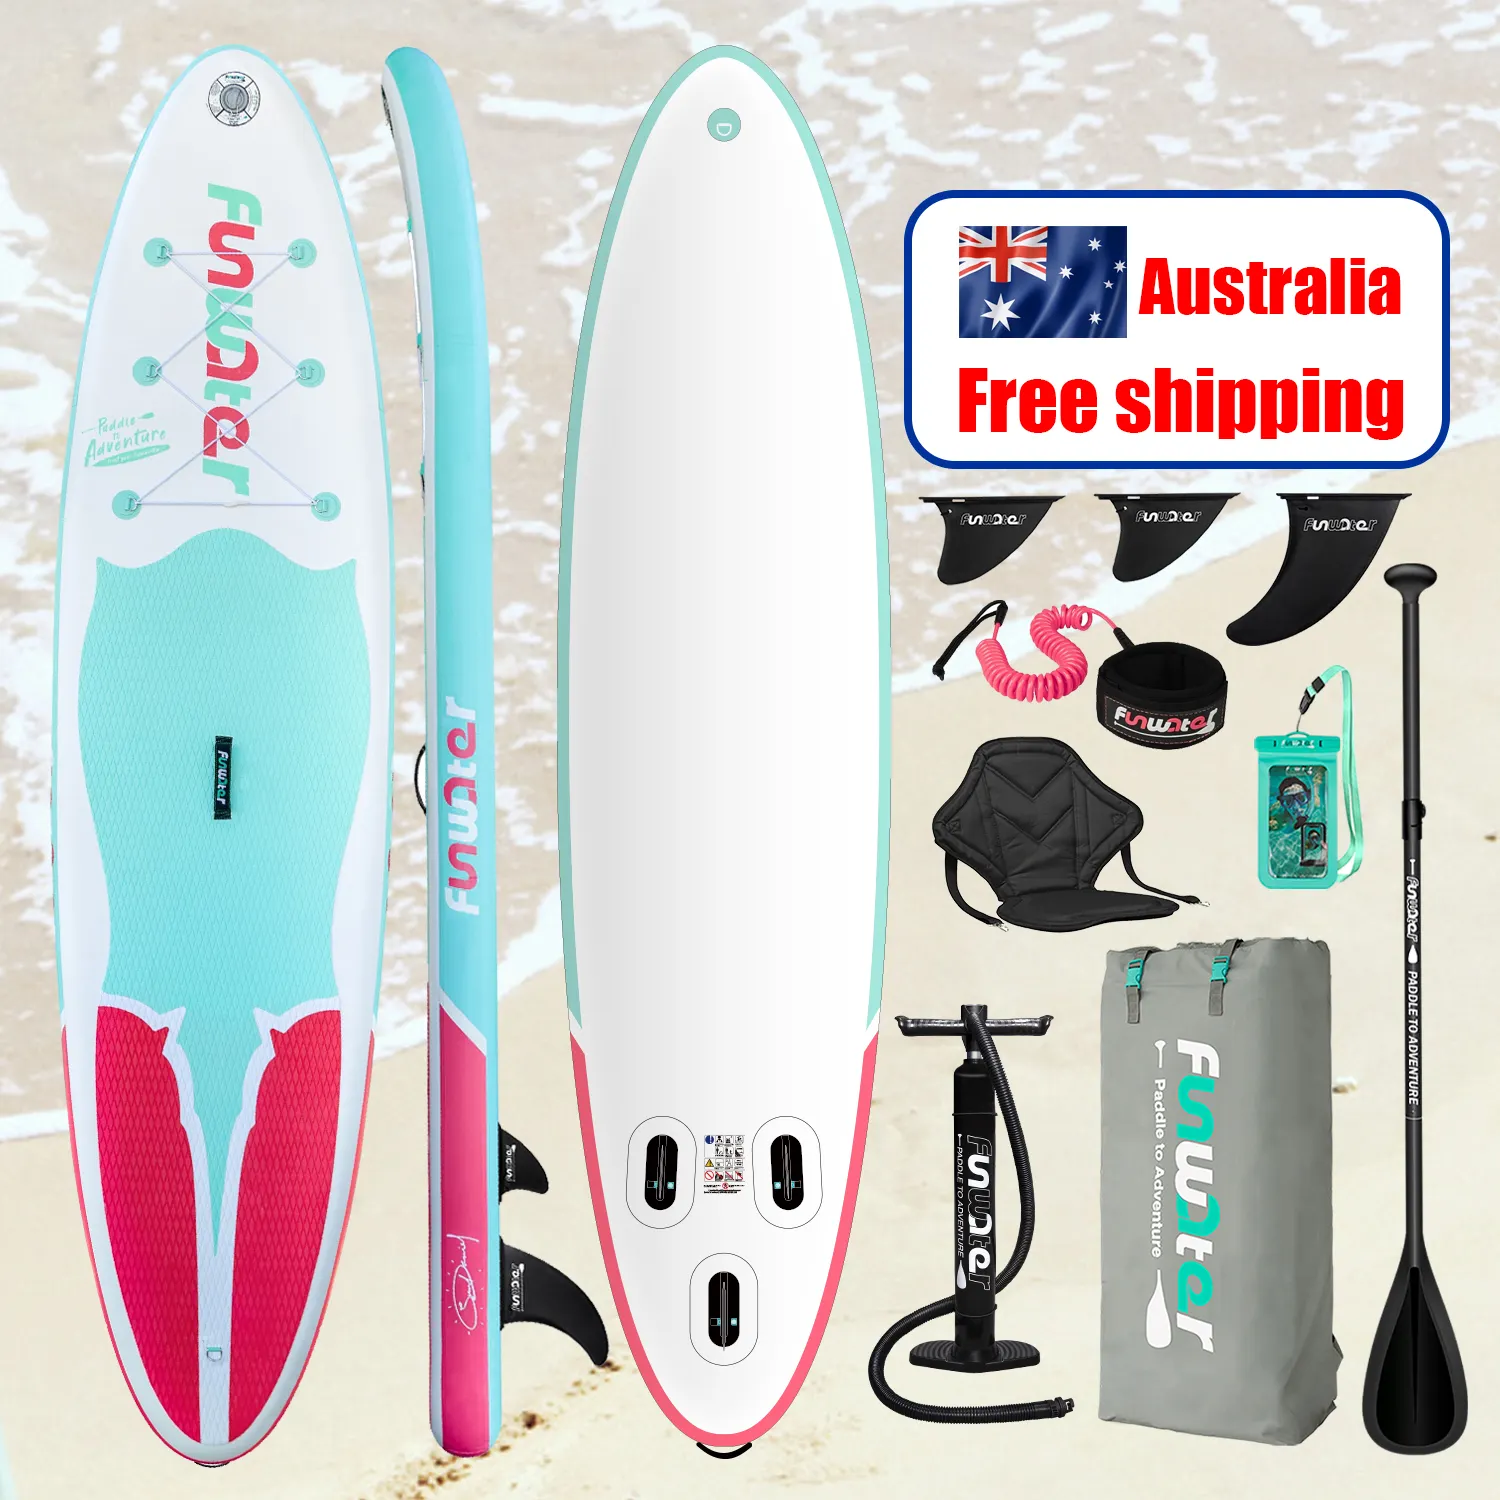 Austrália Frete Grátis Dropshipping Wholesale paddle board soft top prancha stand up paddleboard prancha barbatanas sup board